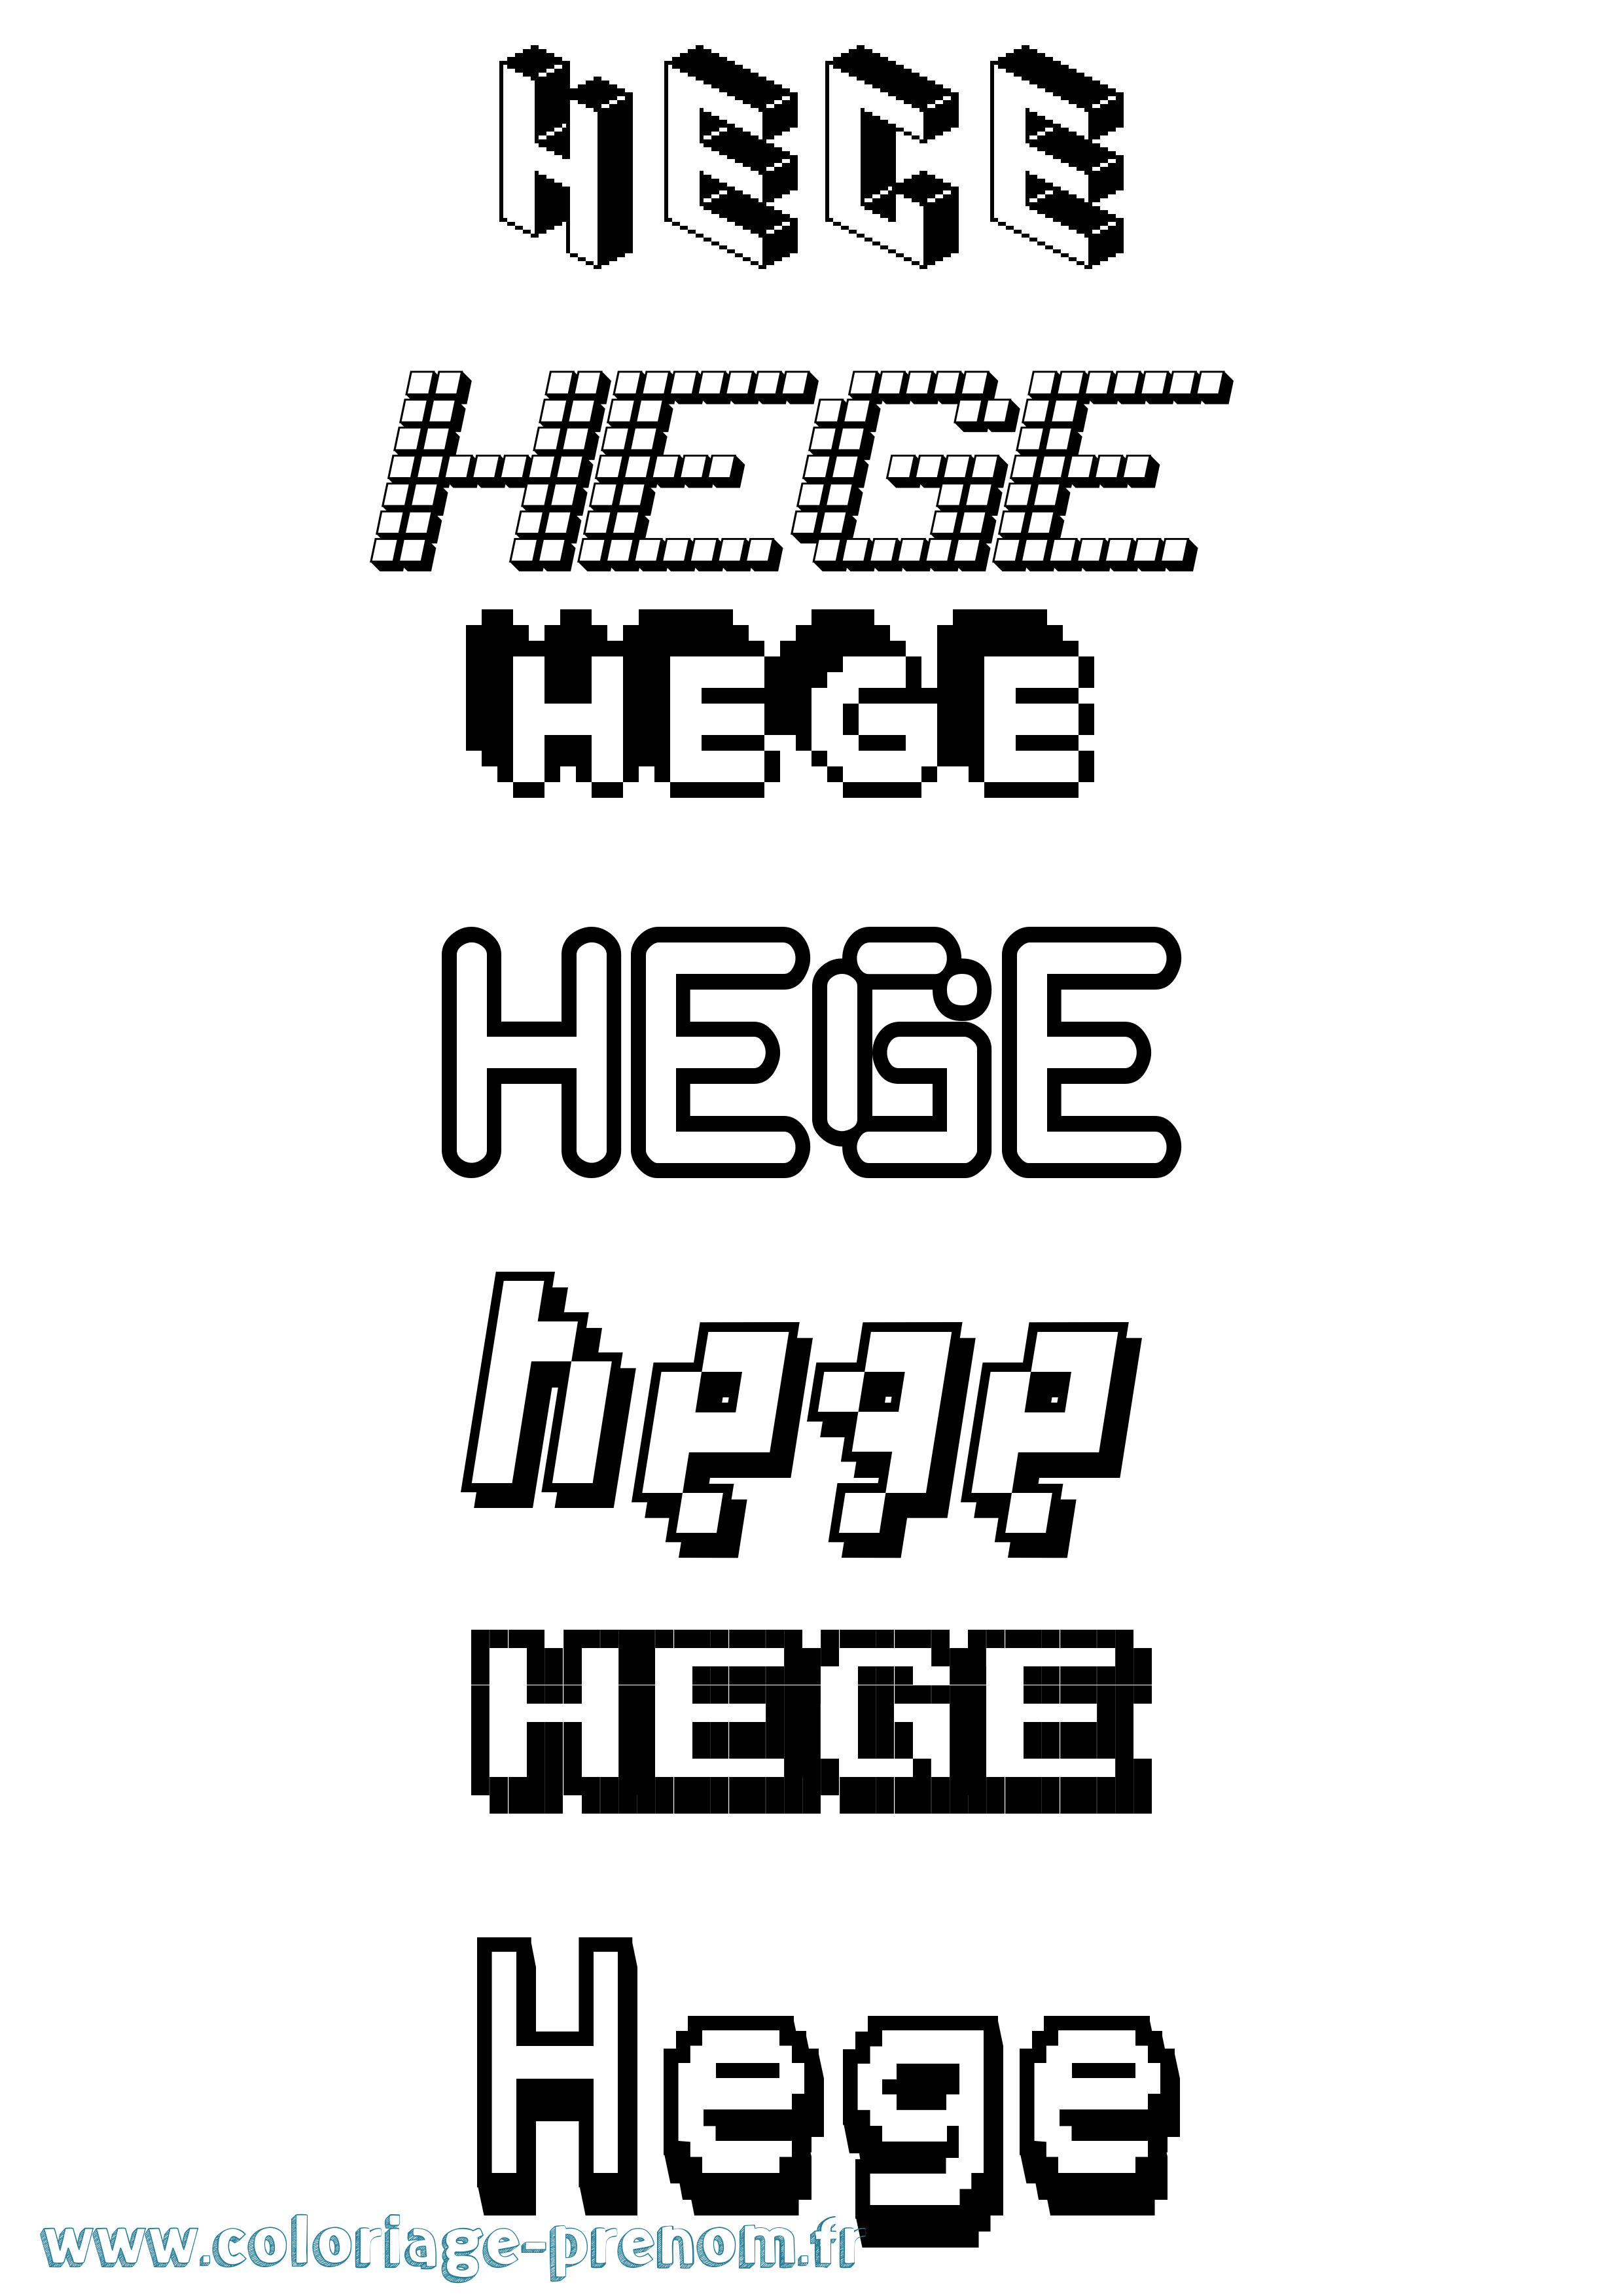 Coloriage prénom Hege Pixel